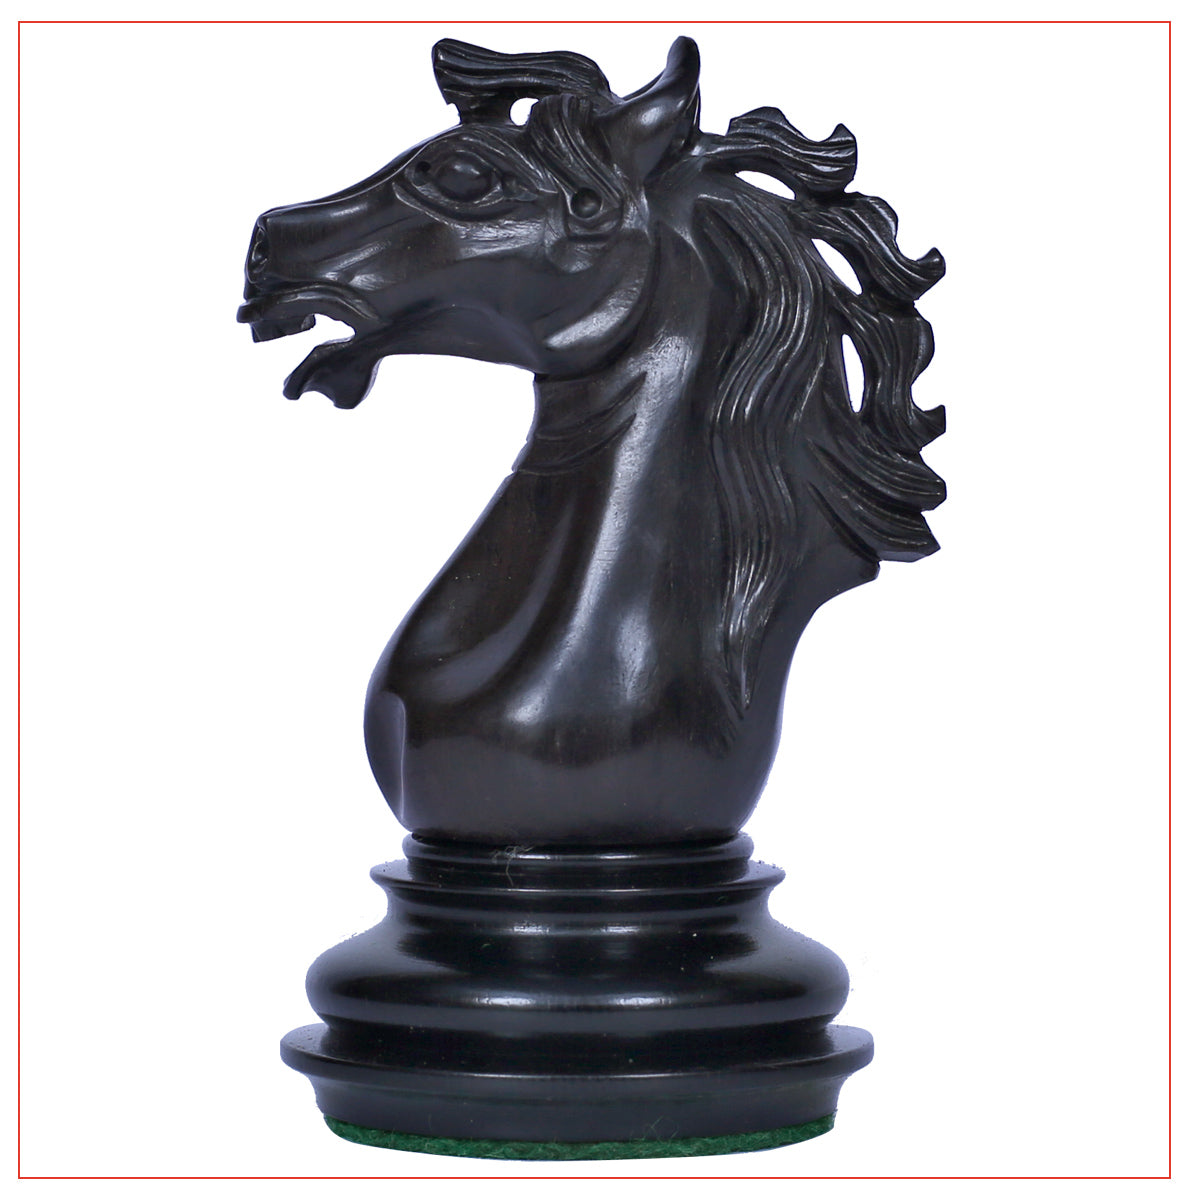 Regal Series Luxury Staunton 4" Chess Set in Ebony wood